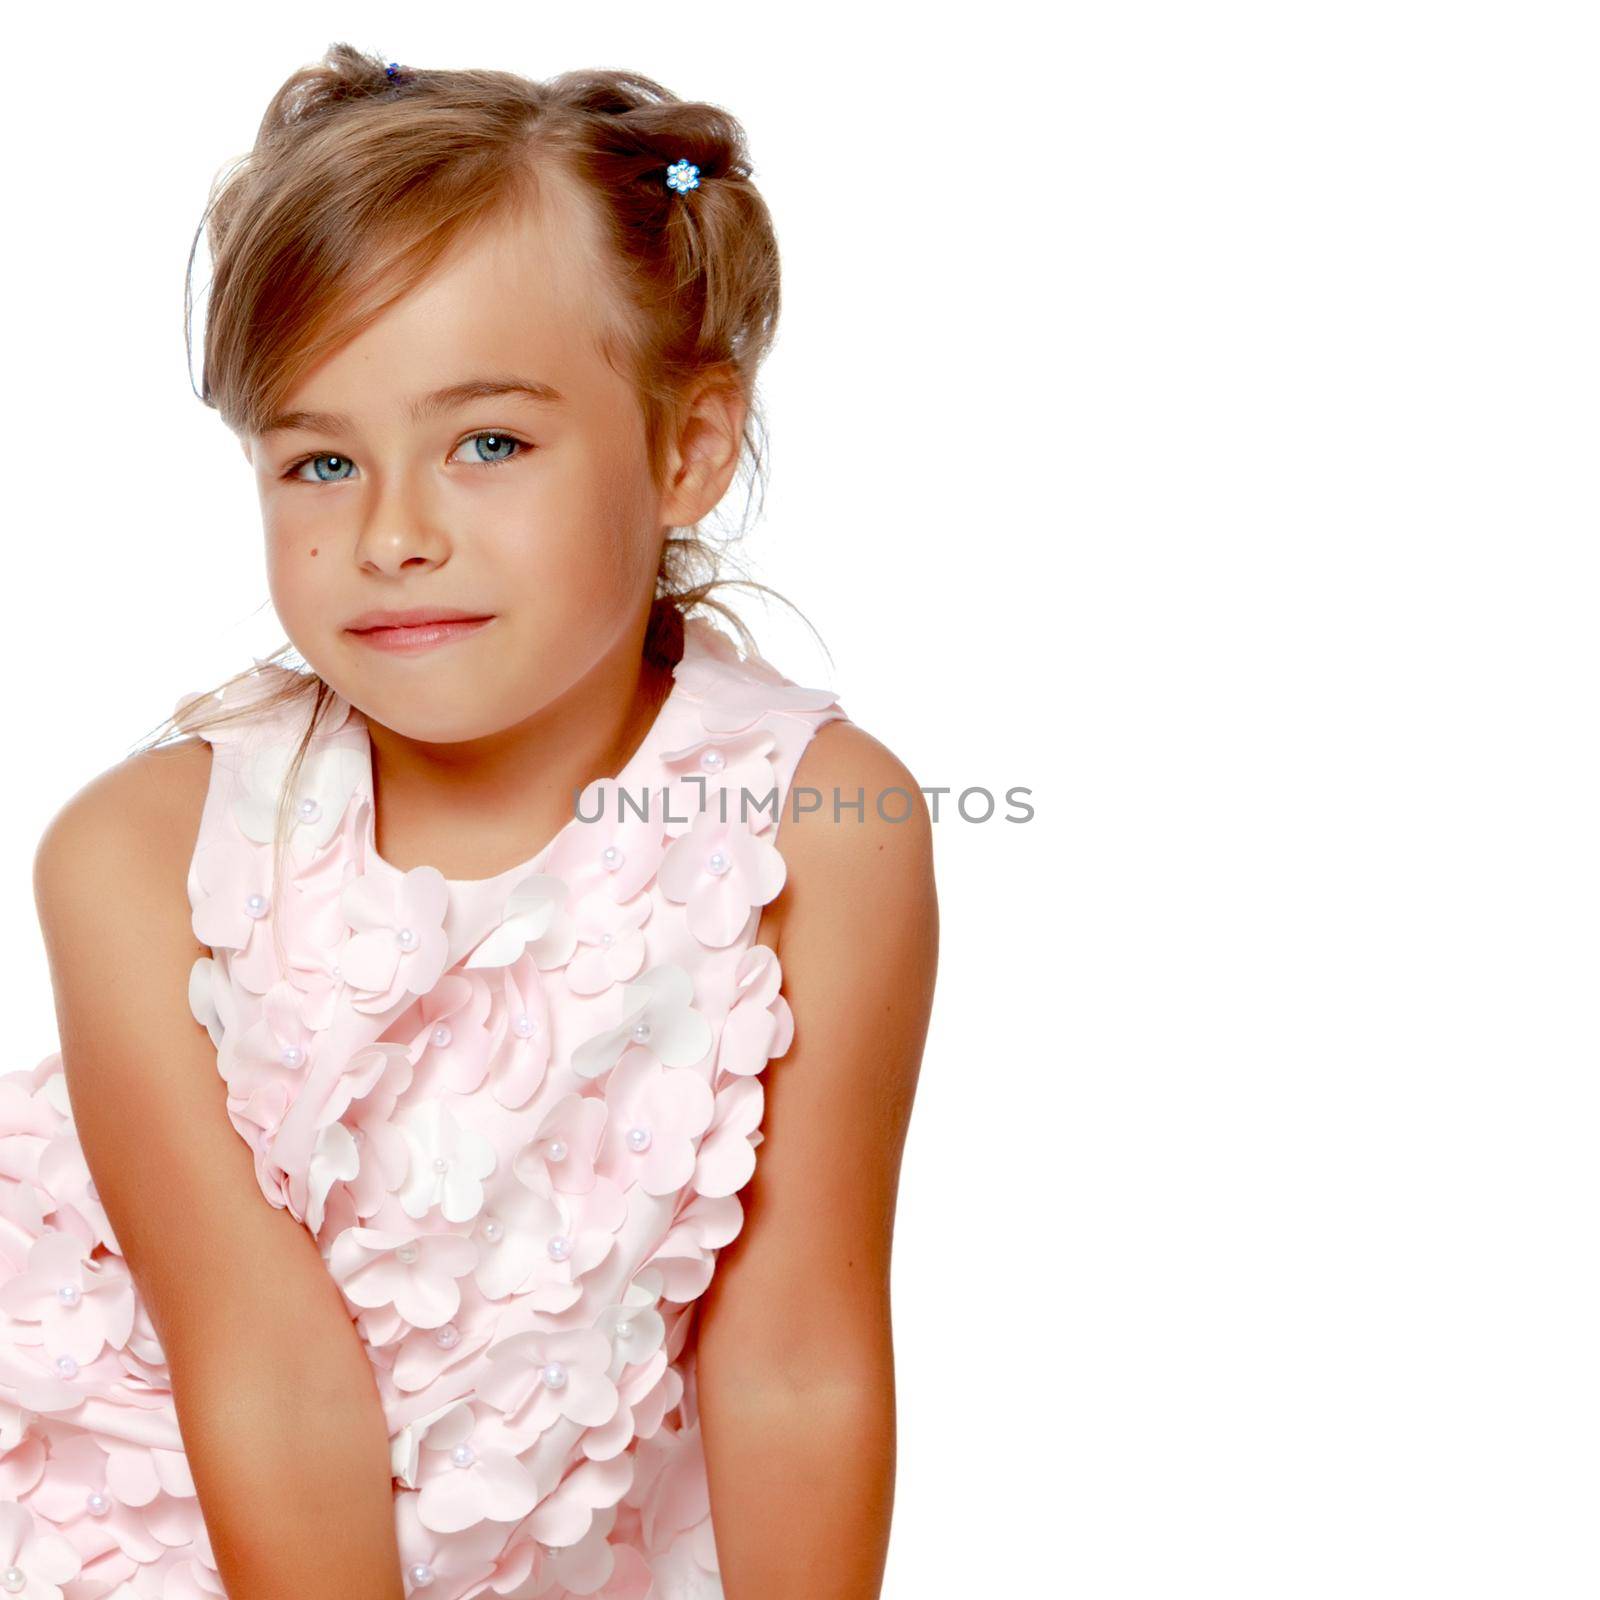 Fashionable little girl in a dress by kolesnikov_studio